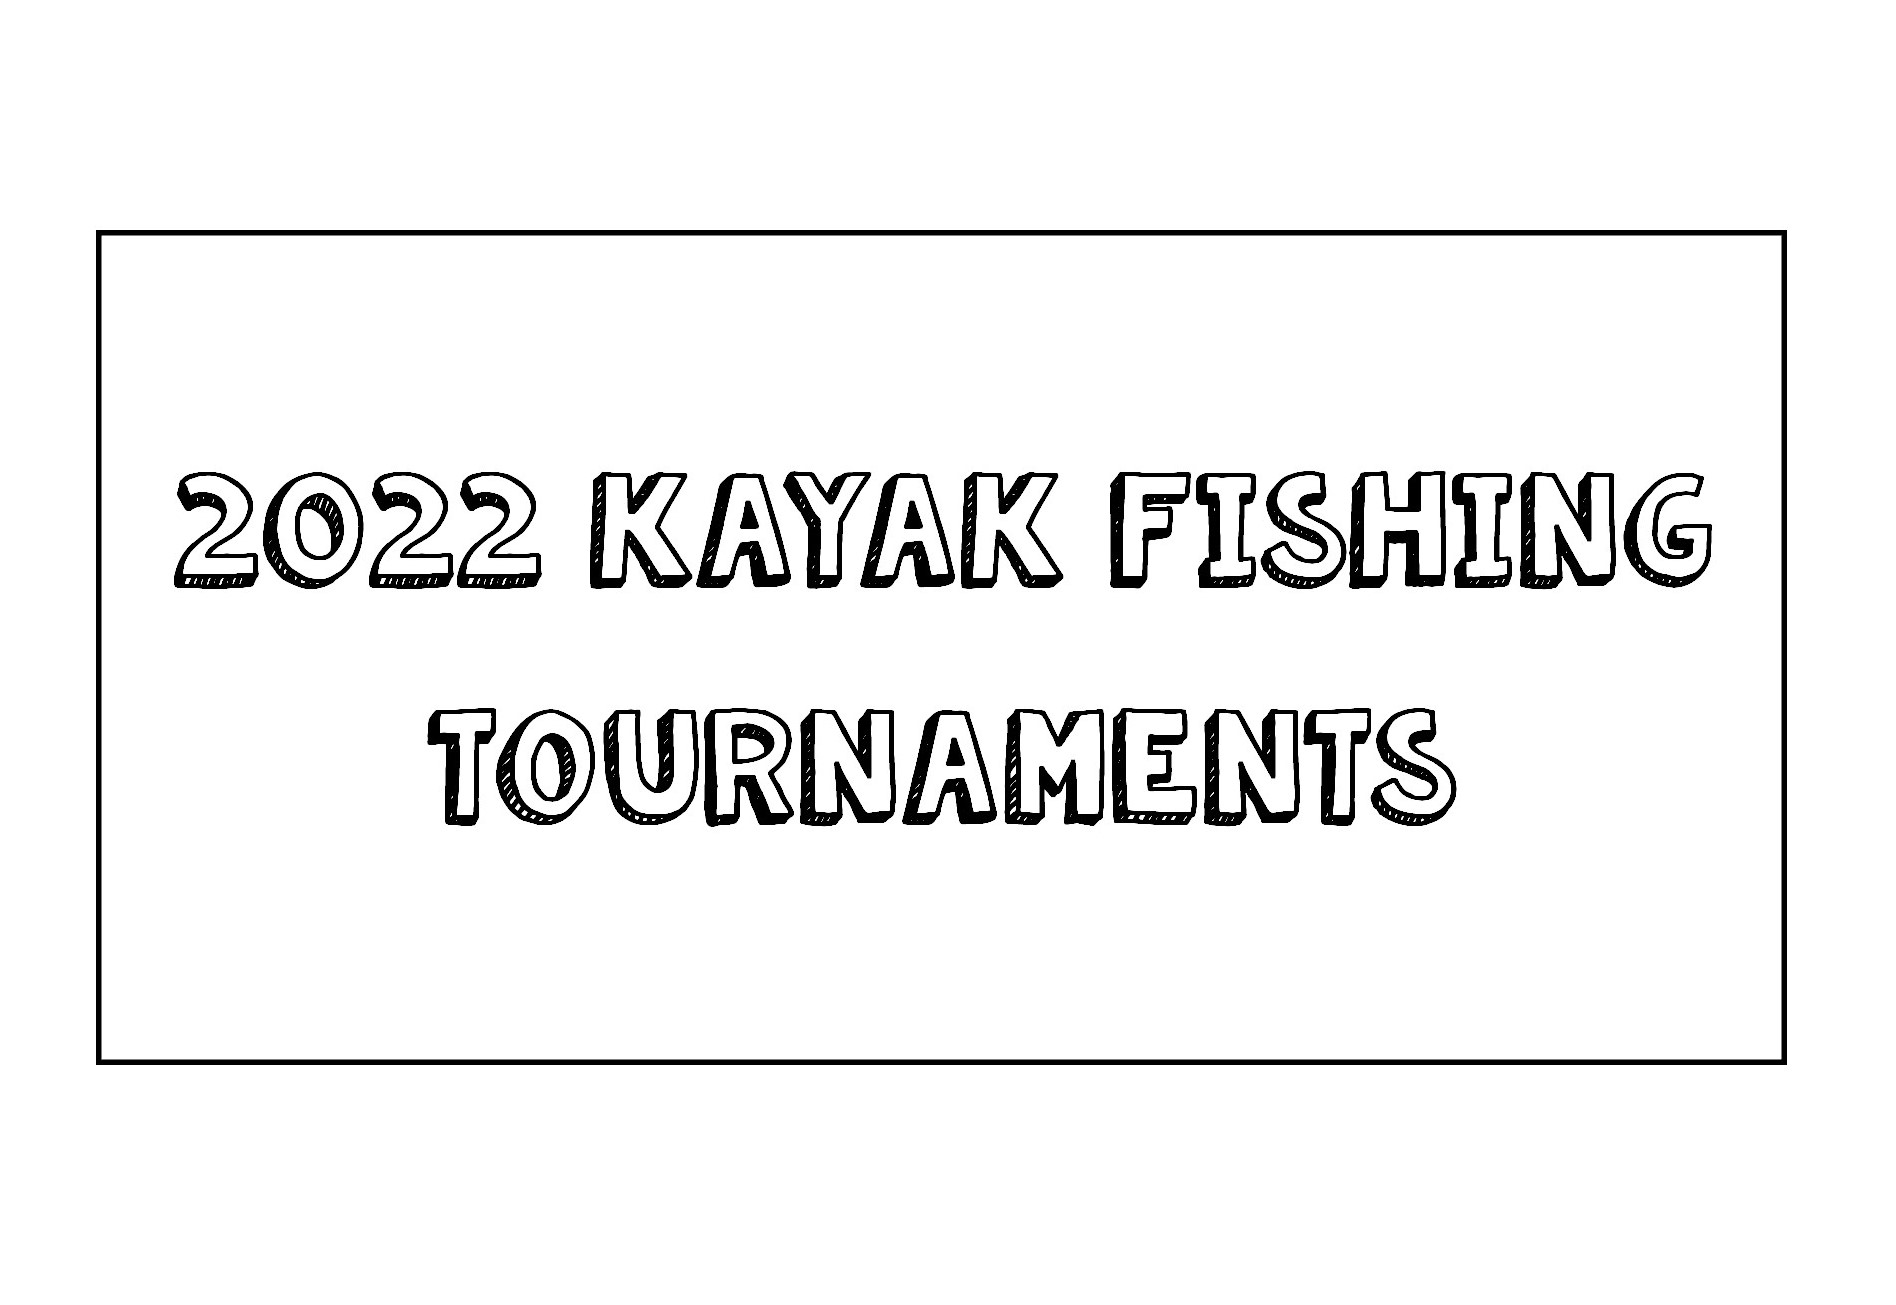 Text: 2022 Kayak Fishing Tournaments